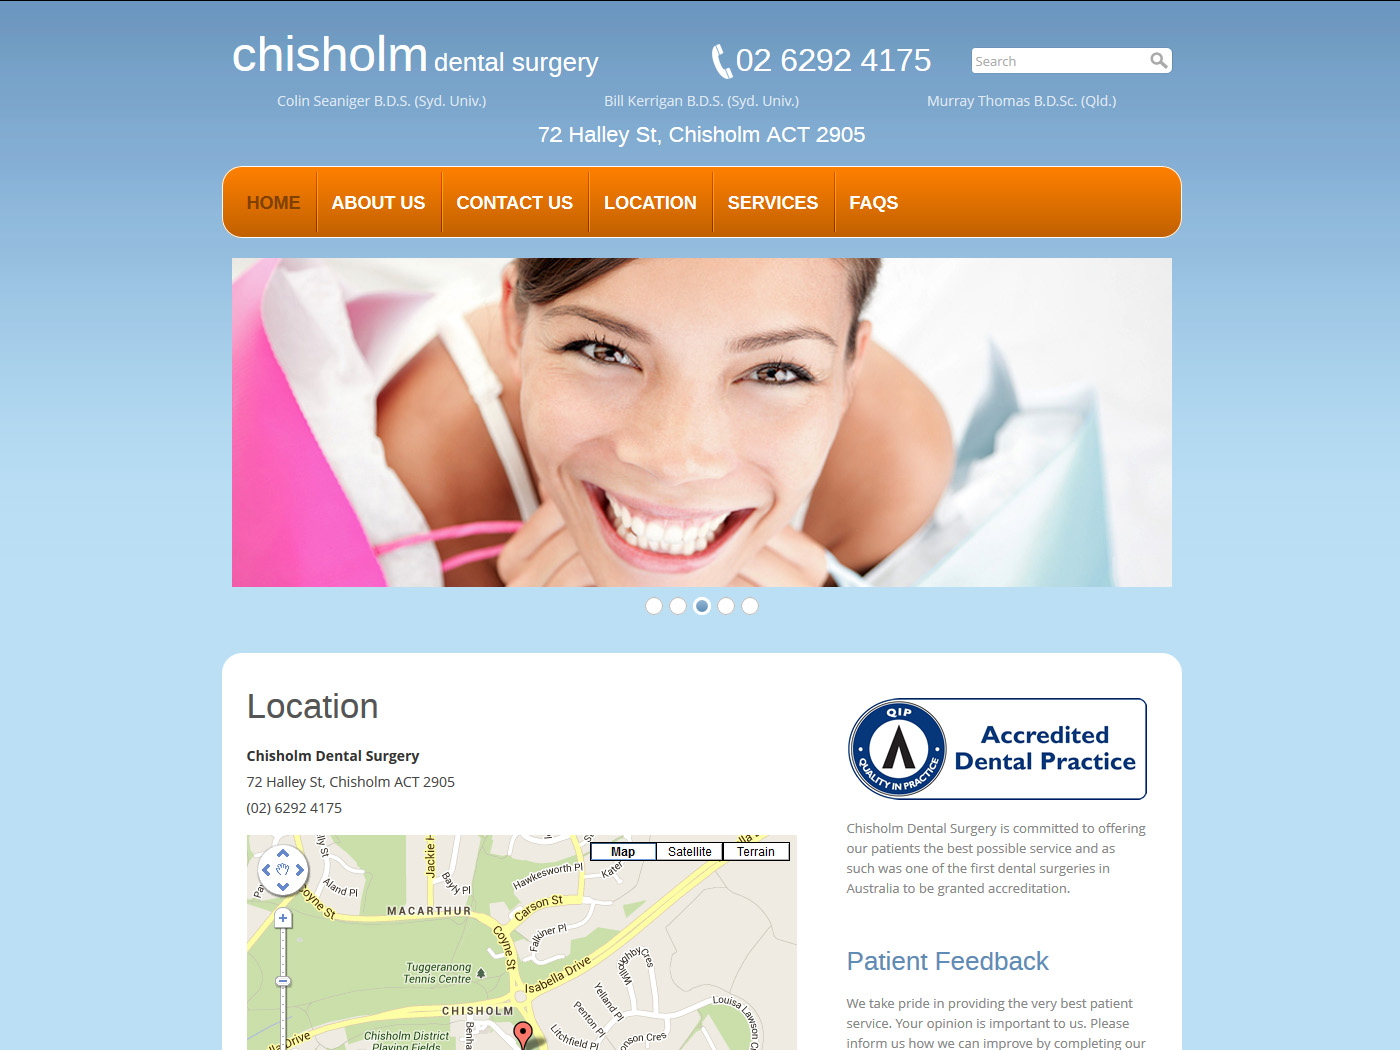 Chisholm Dental Surgery (Praxis Interactive)